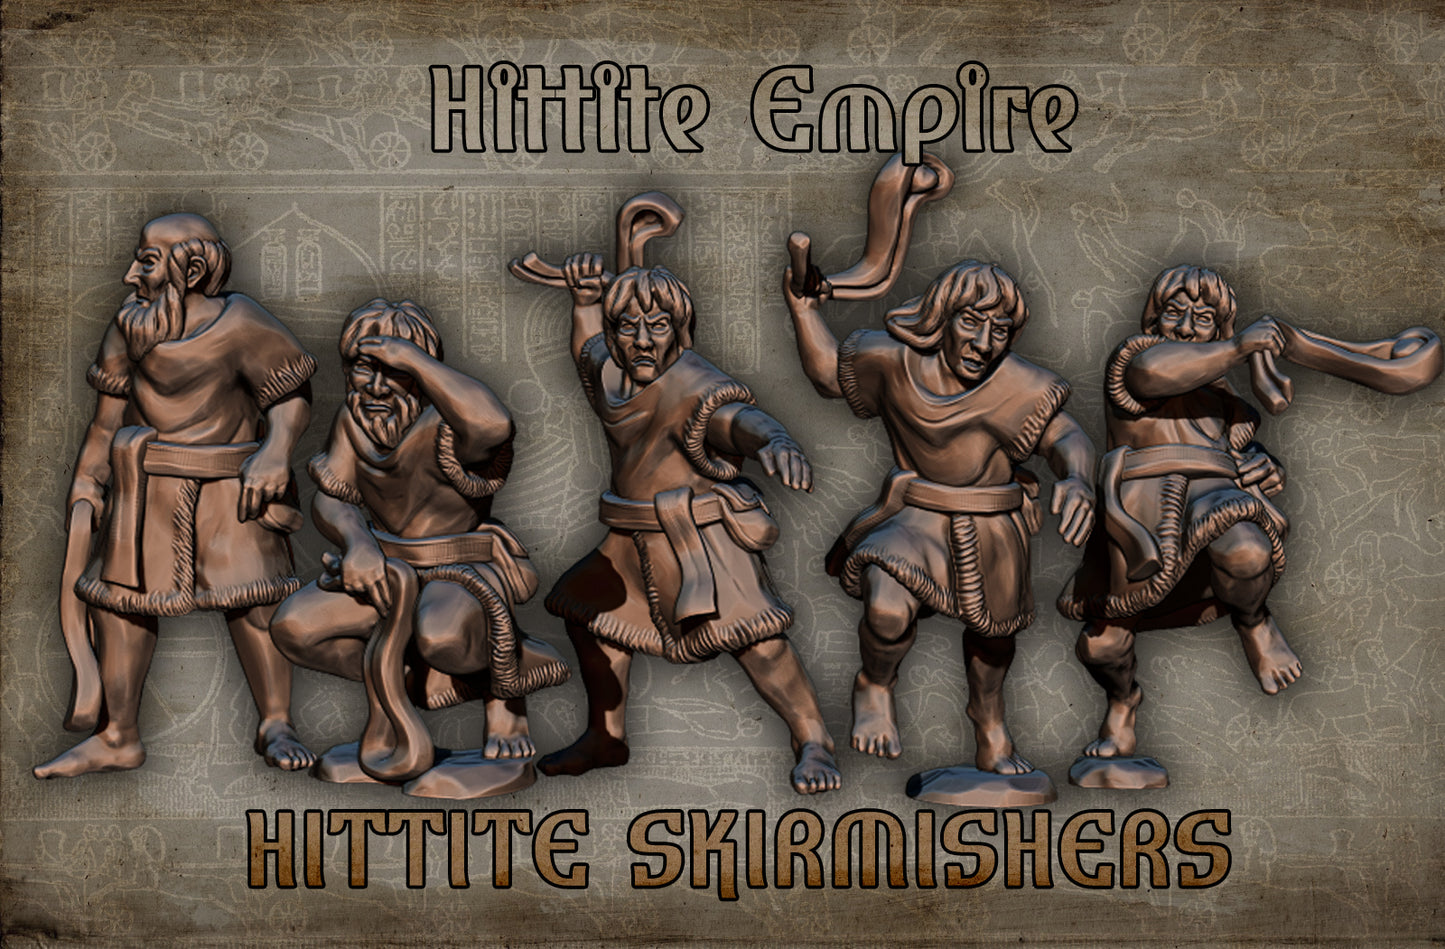 Hittite Skirmishers